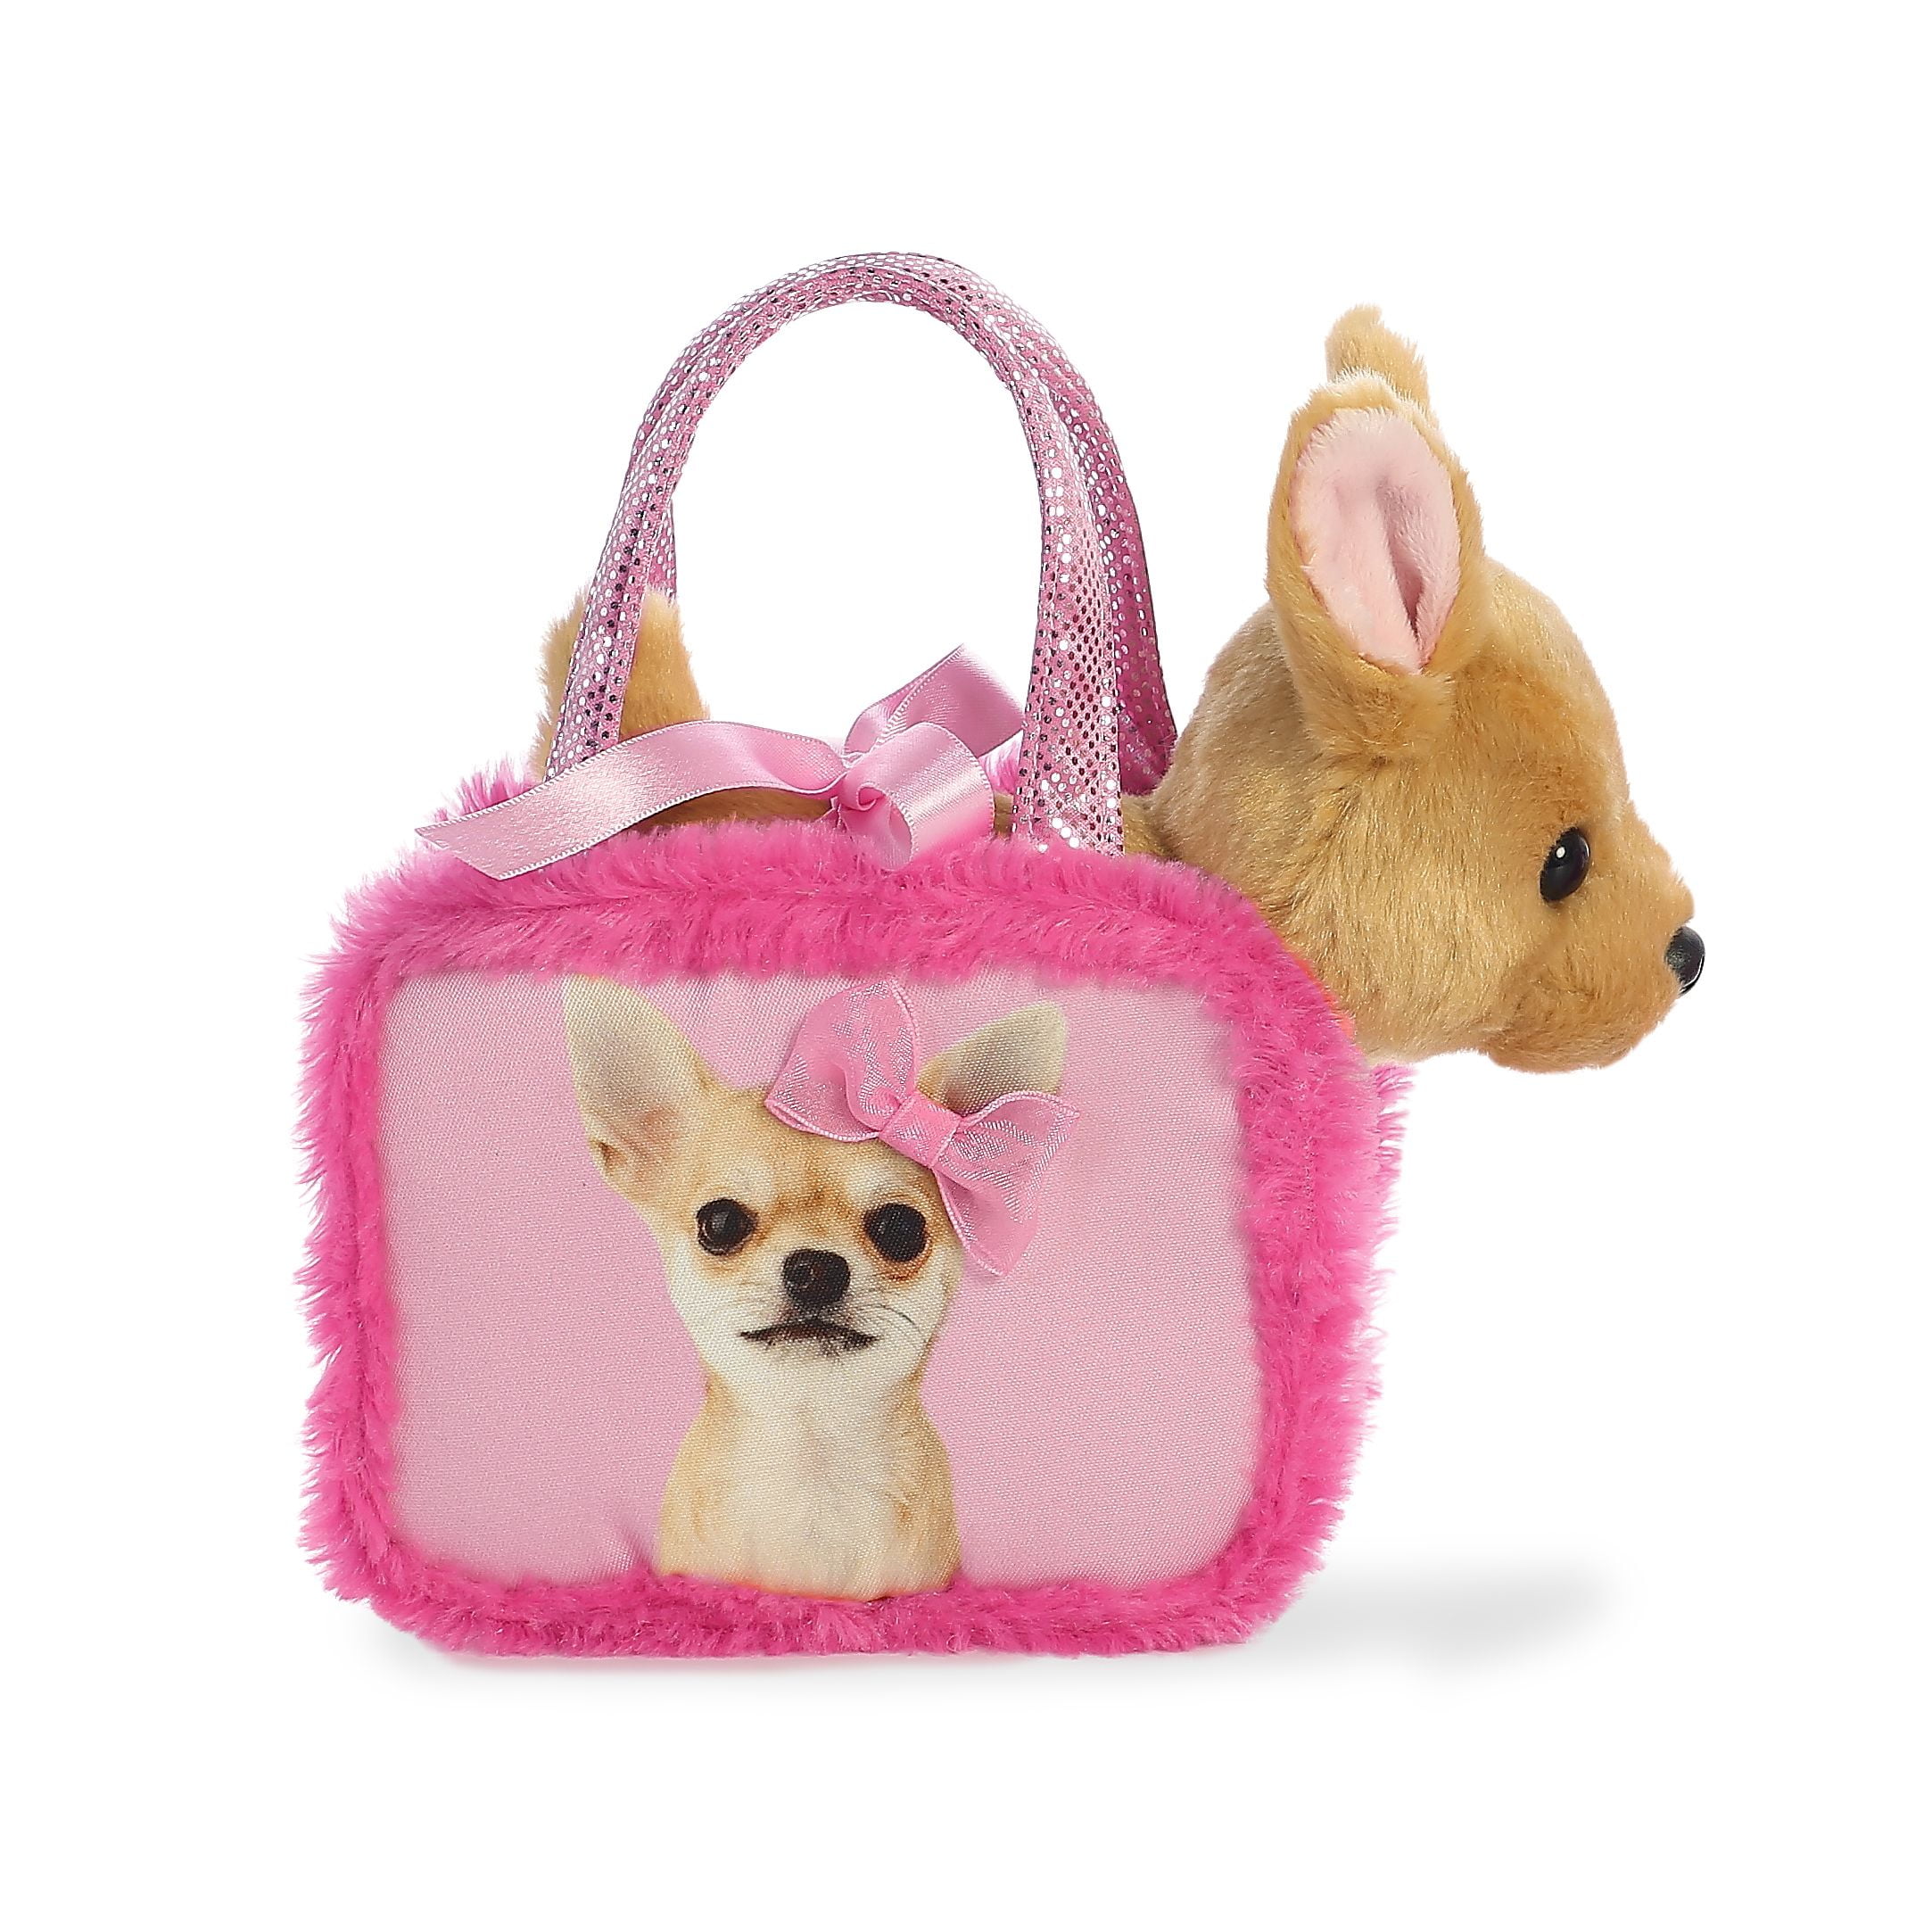 Delia's Girl Chihuahua Puppy Pink Handbag with Plush Puppy Handbag Toy 